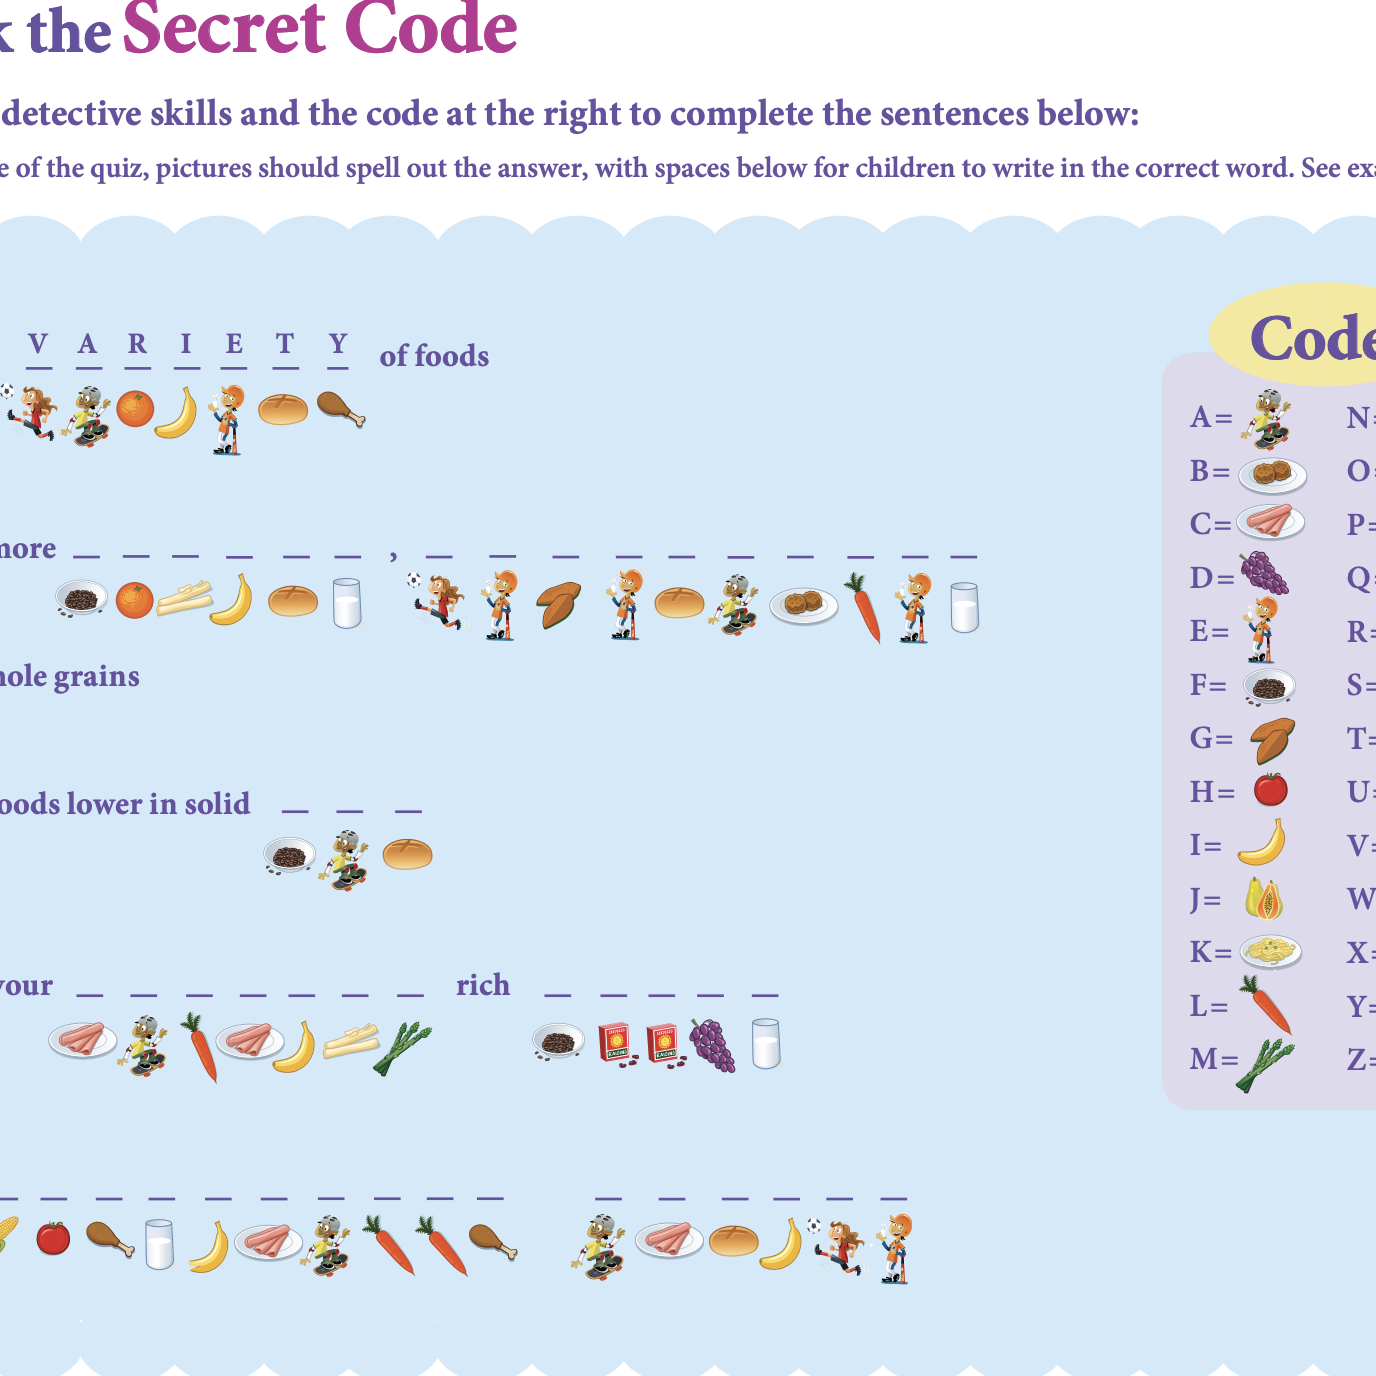 Crack the secret code Game